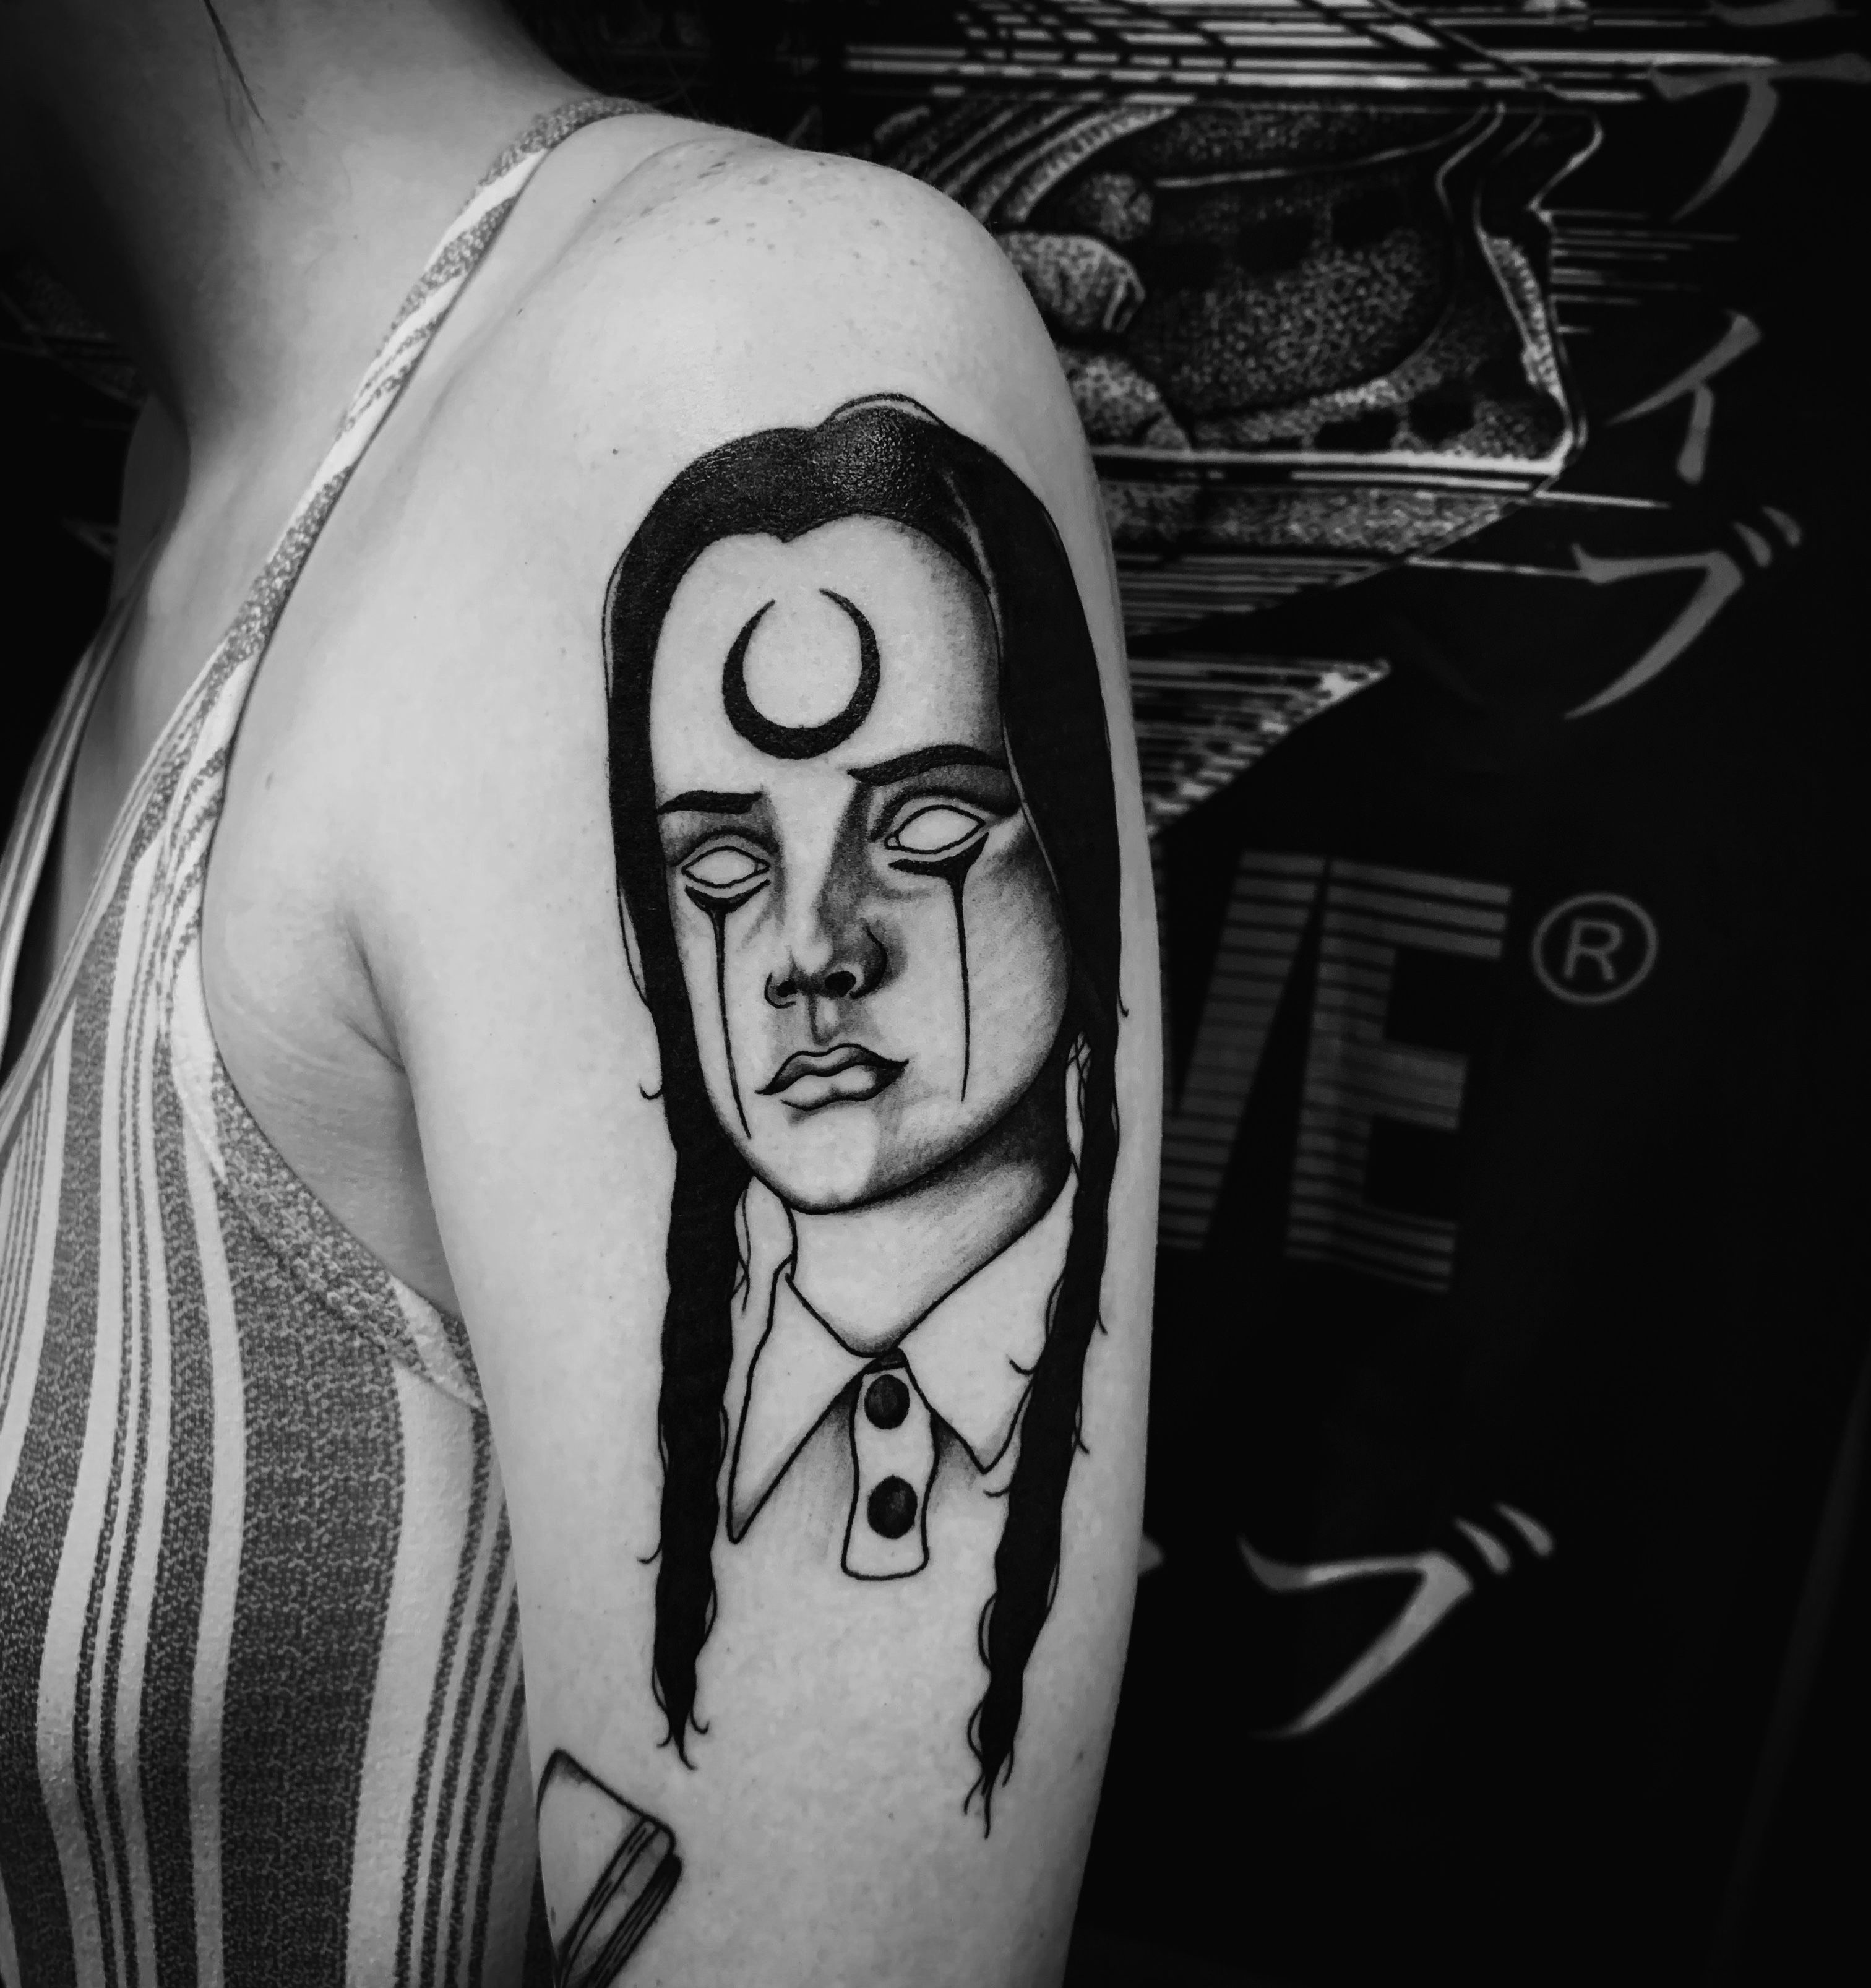 Tattoo uploaded by Jordan K • Wednesday Addams dark art • Tattoodo